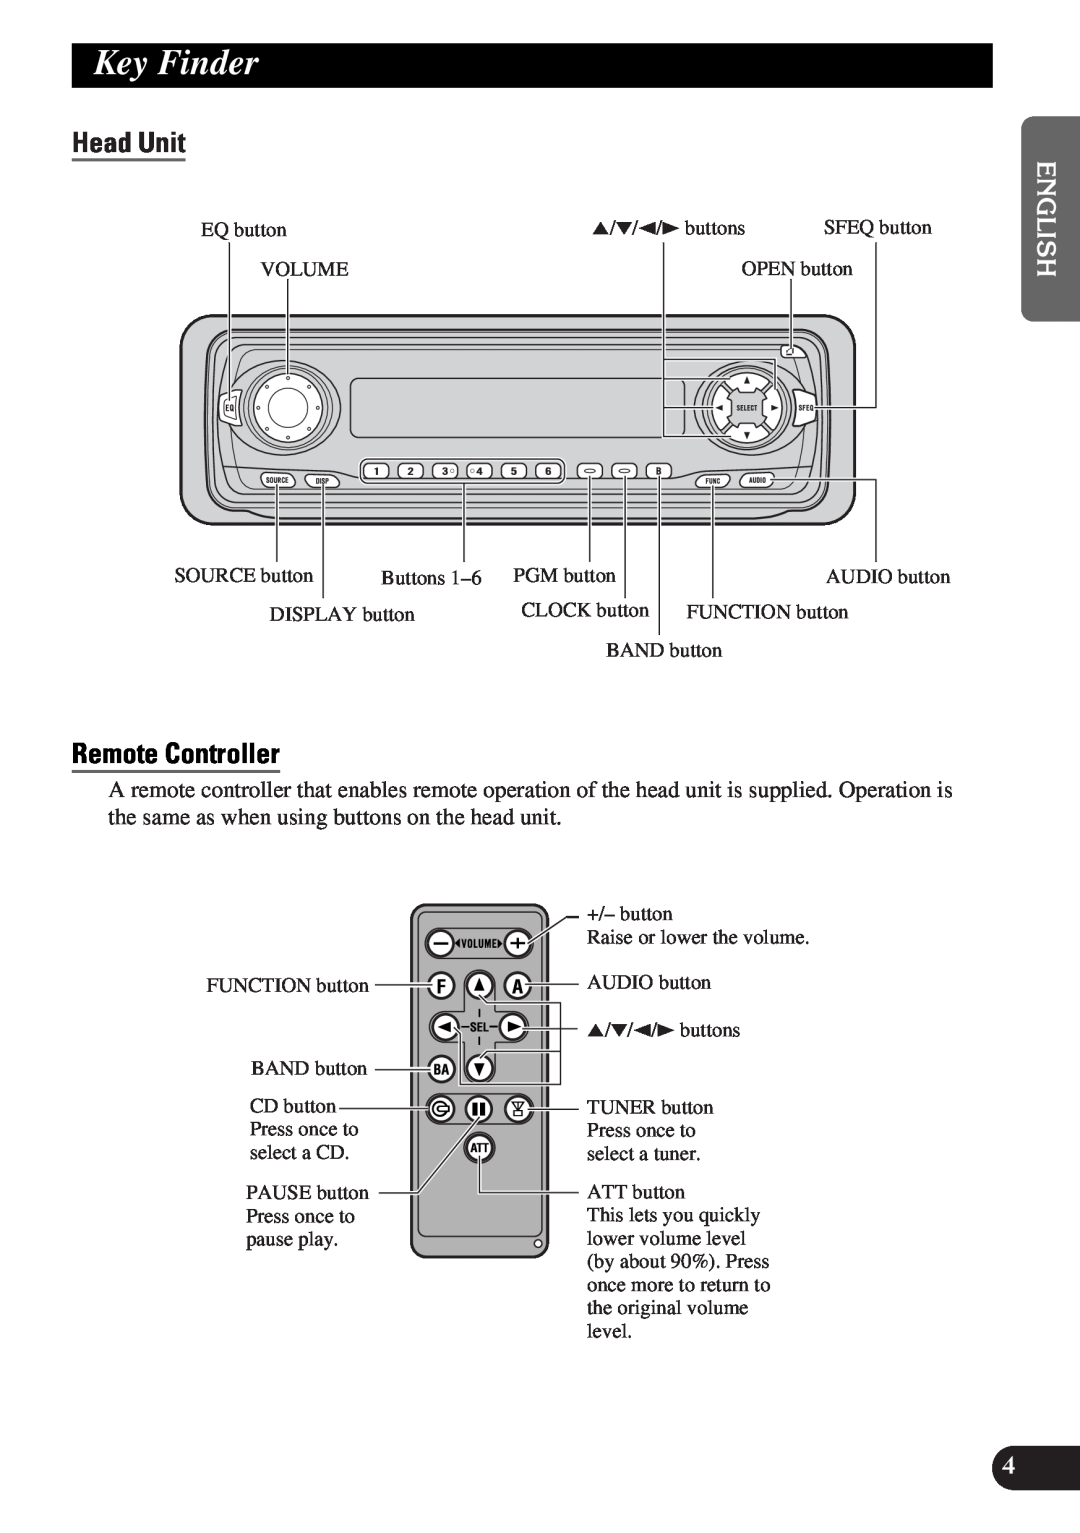 Pioneer DEH-P4300 operation manual Key Finder, Head Unit, Remote Controller, English Español Deutsch Français, Nederlands 